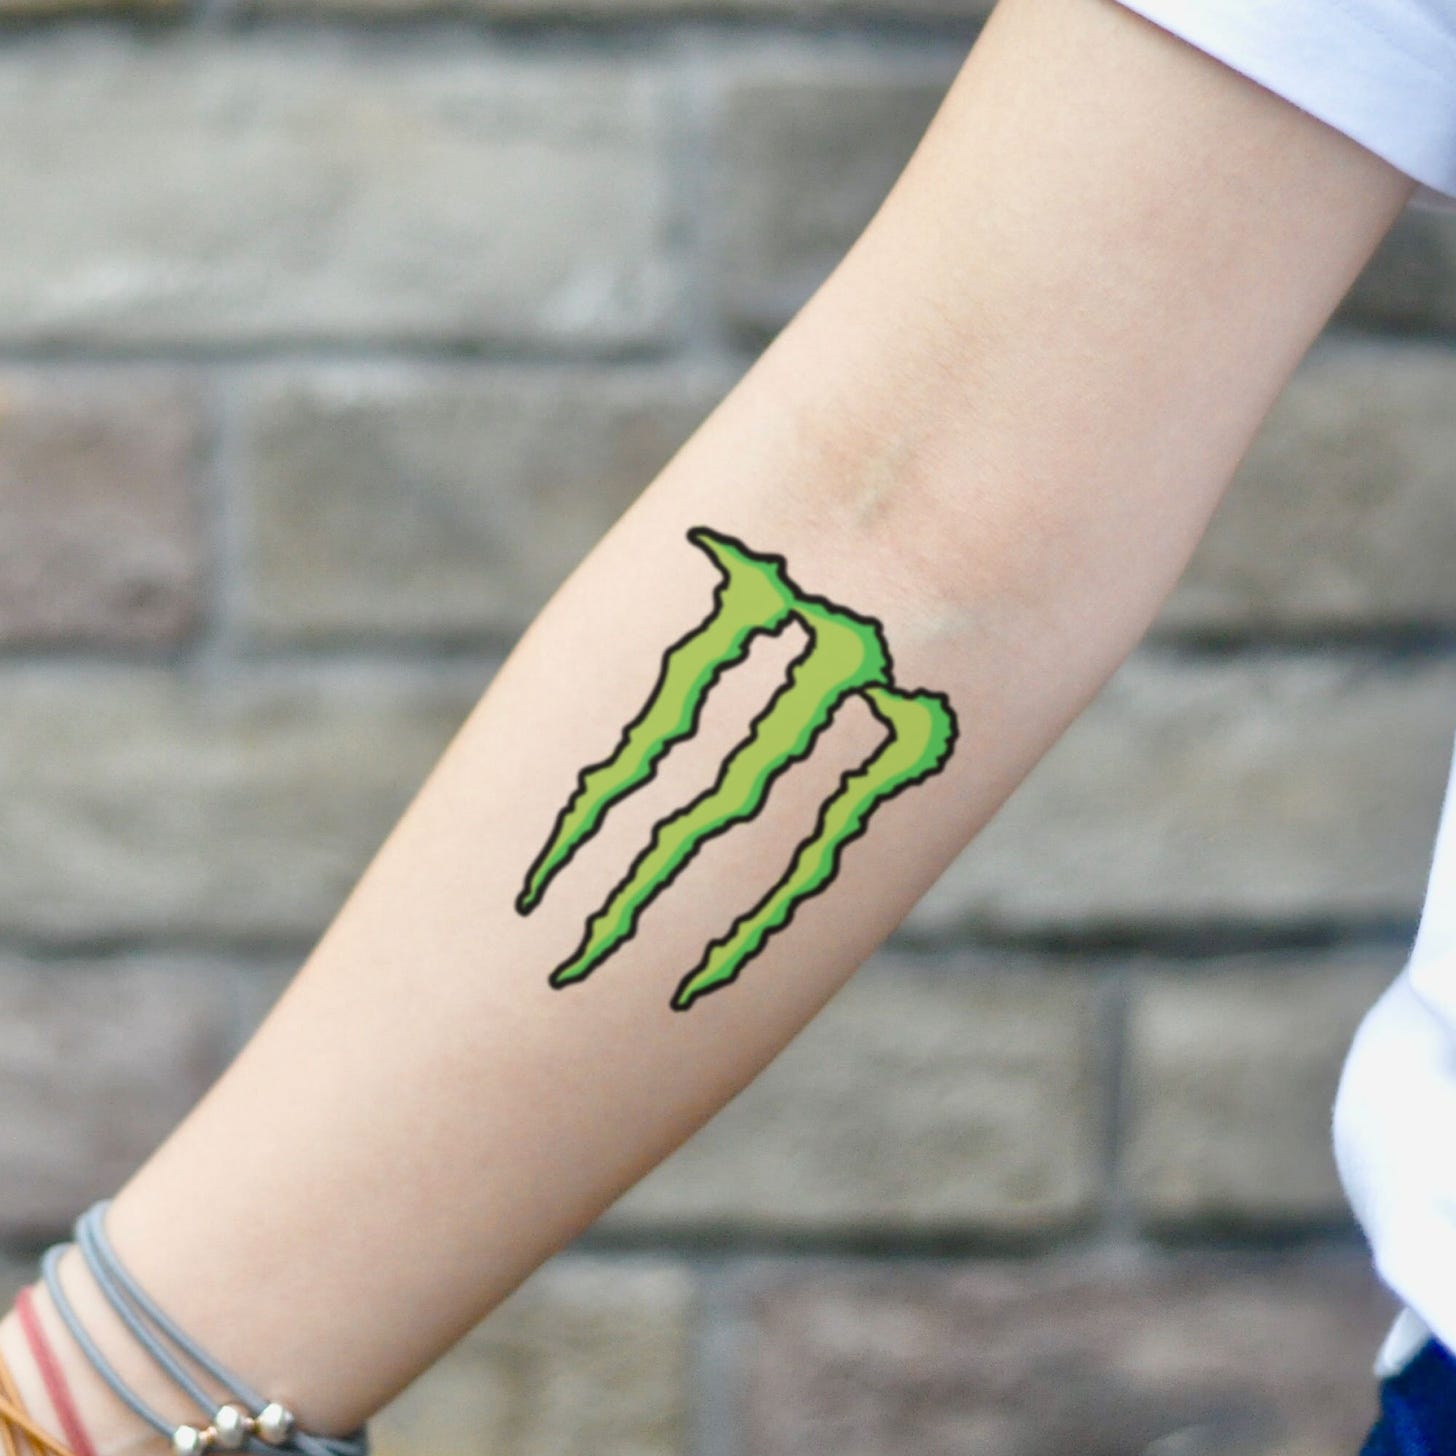 Monster Energy Drink Logo Temporary Tattoo Sticker - OhMyTat